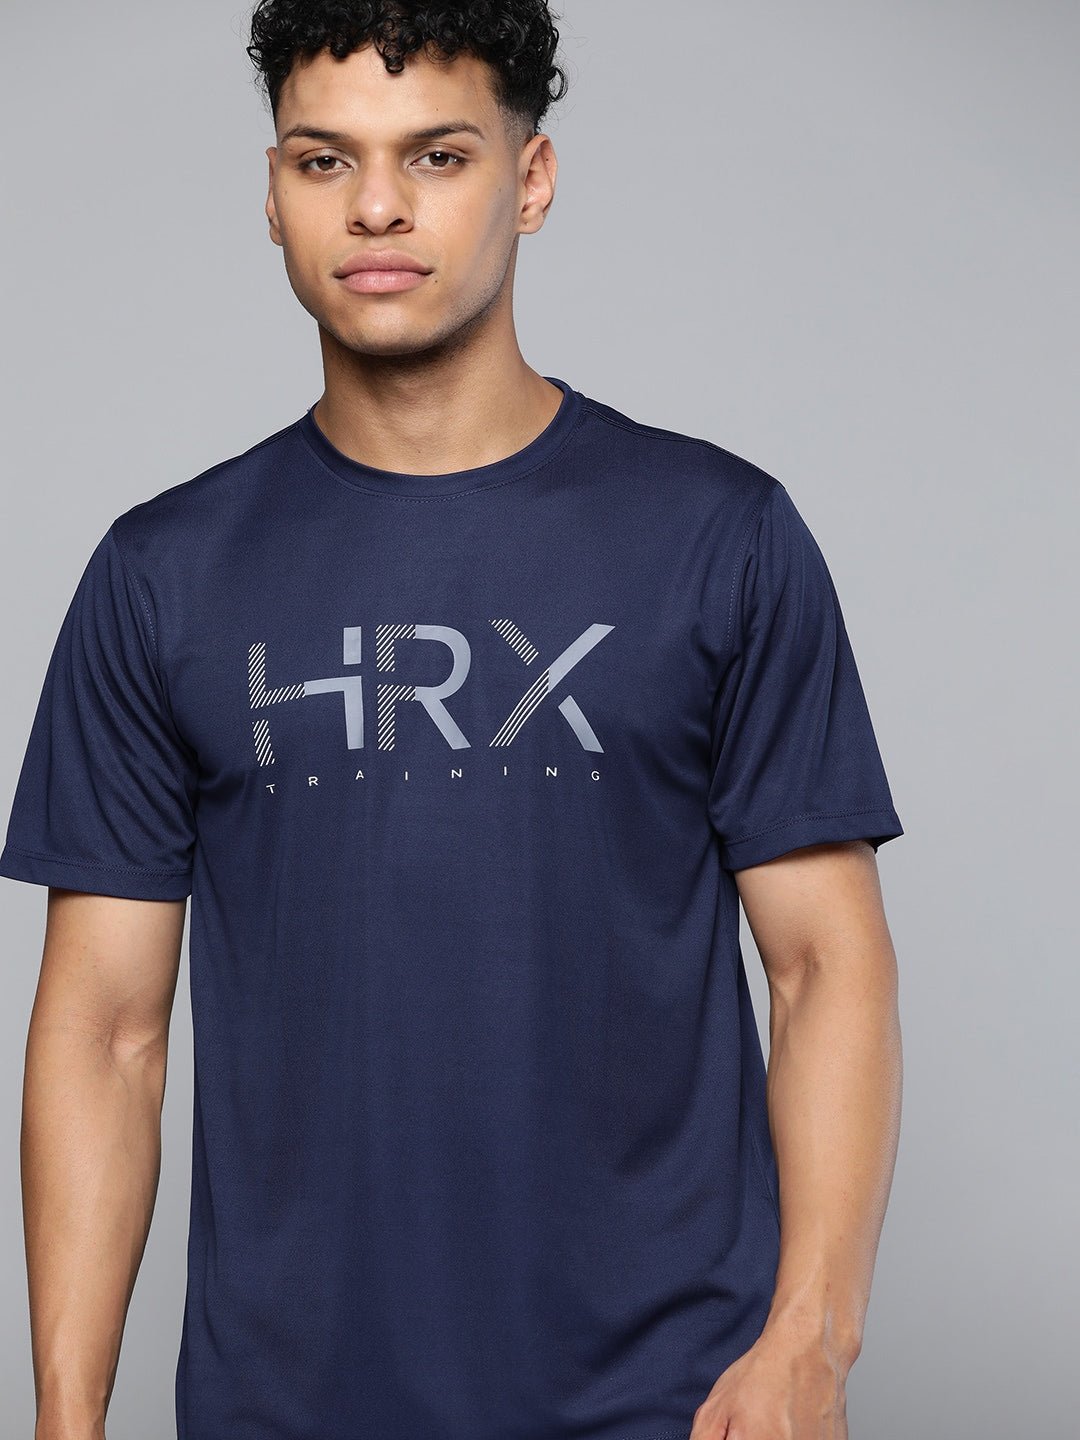 HRX brand